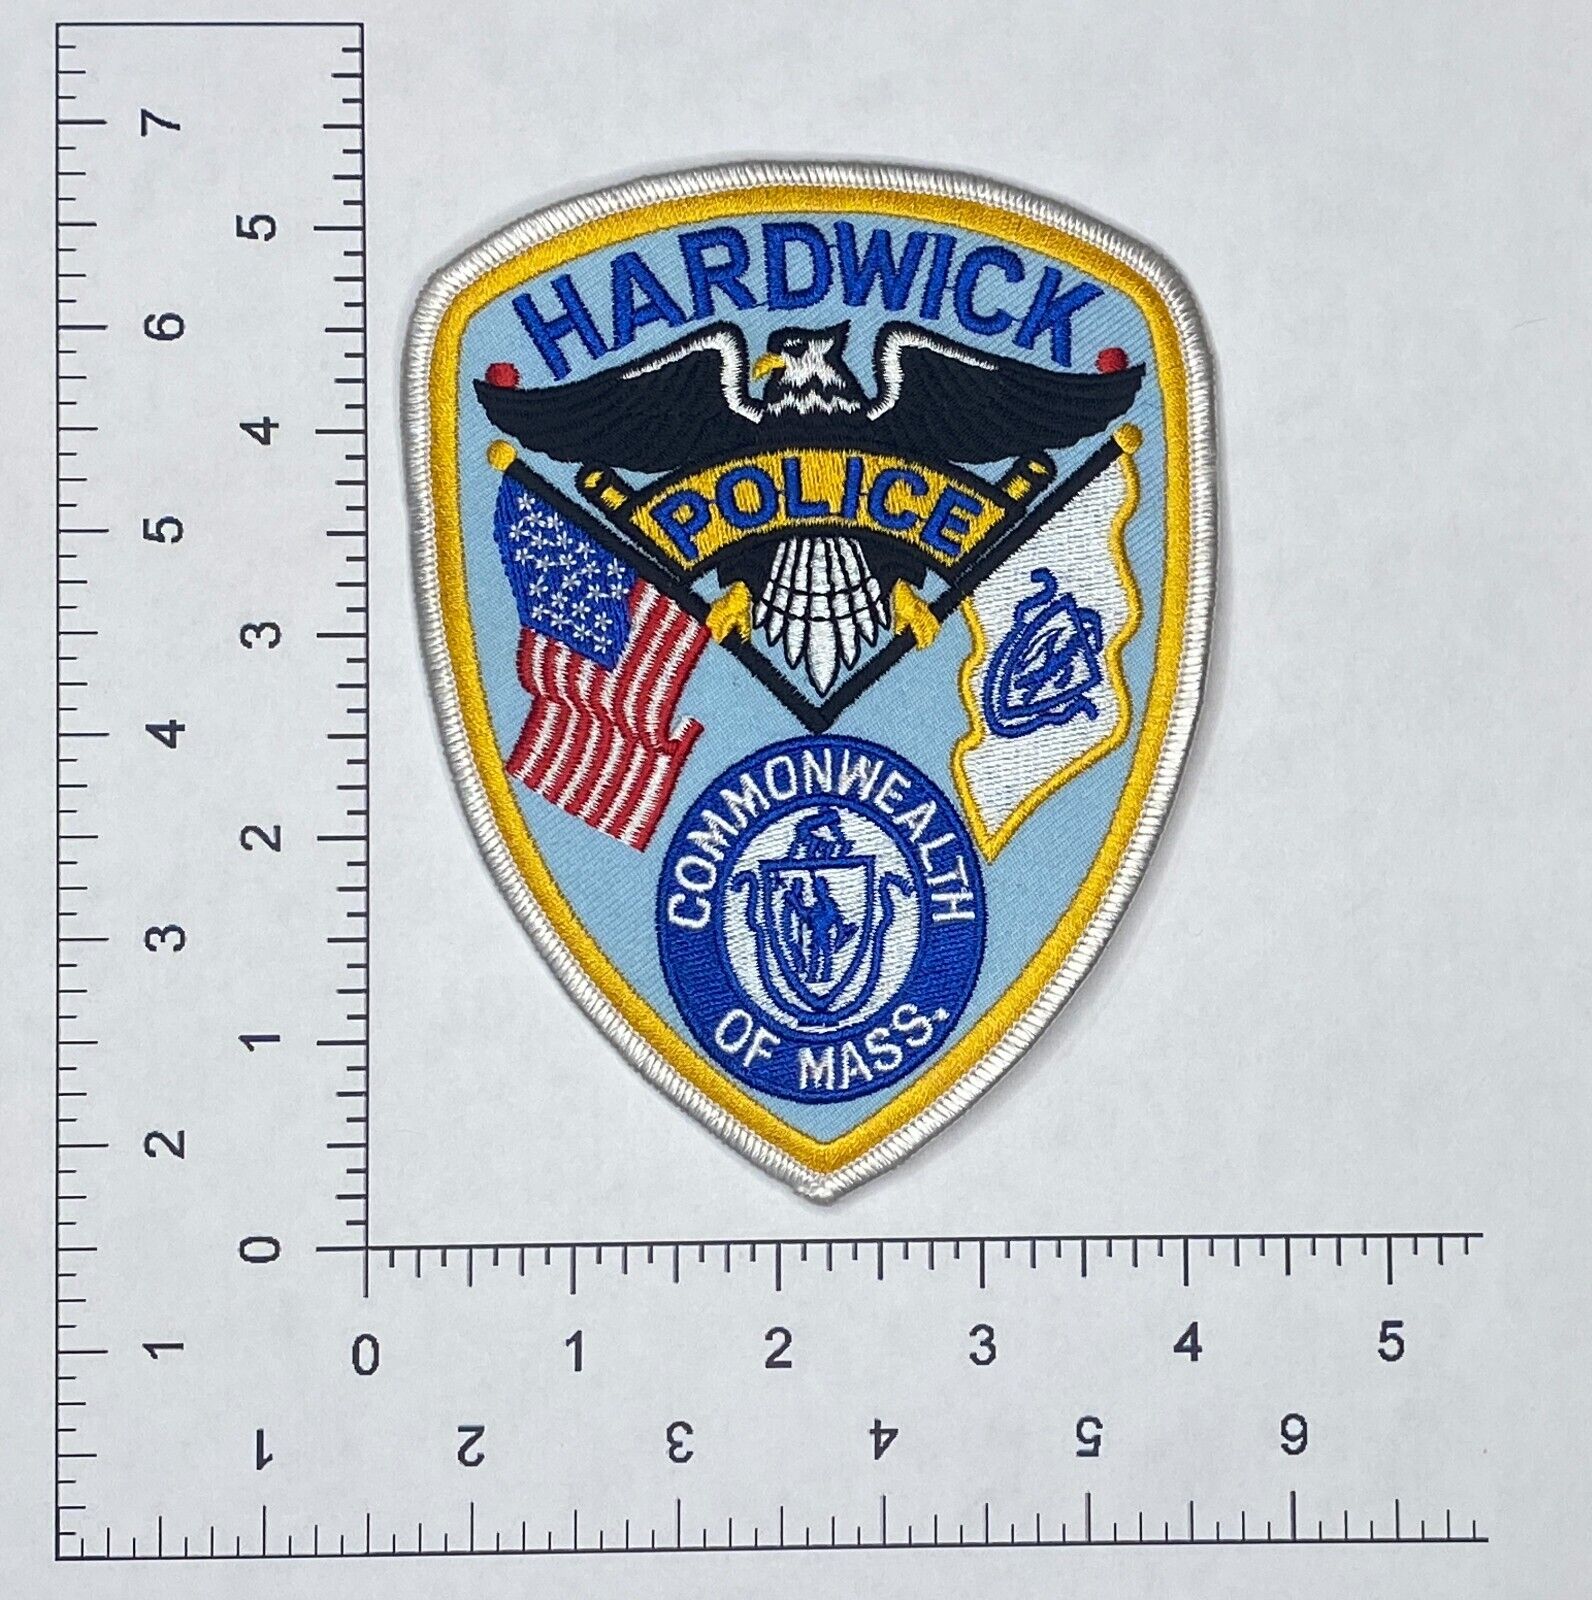 Hardwick Massachusetts Police Patch - new, unsewn